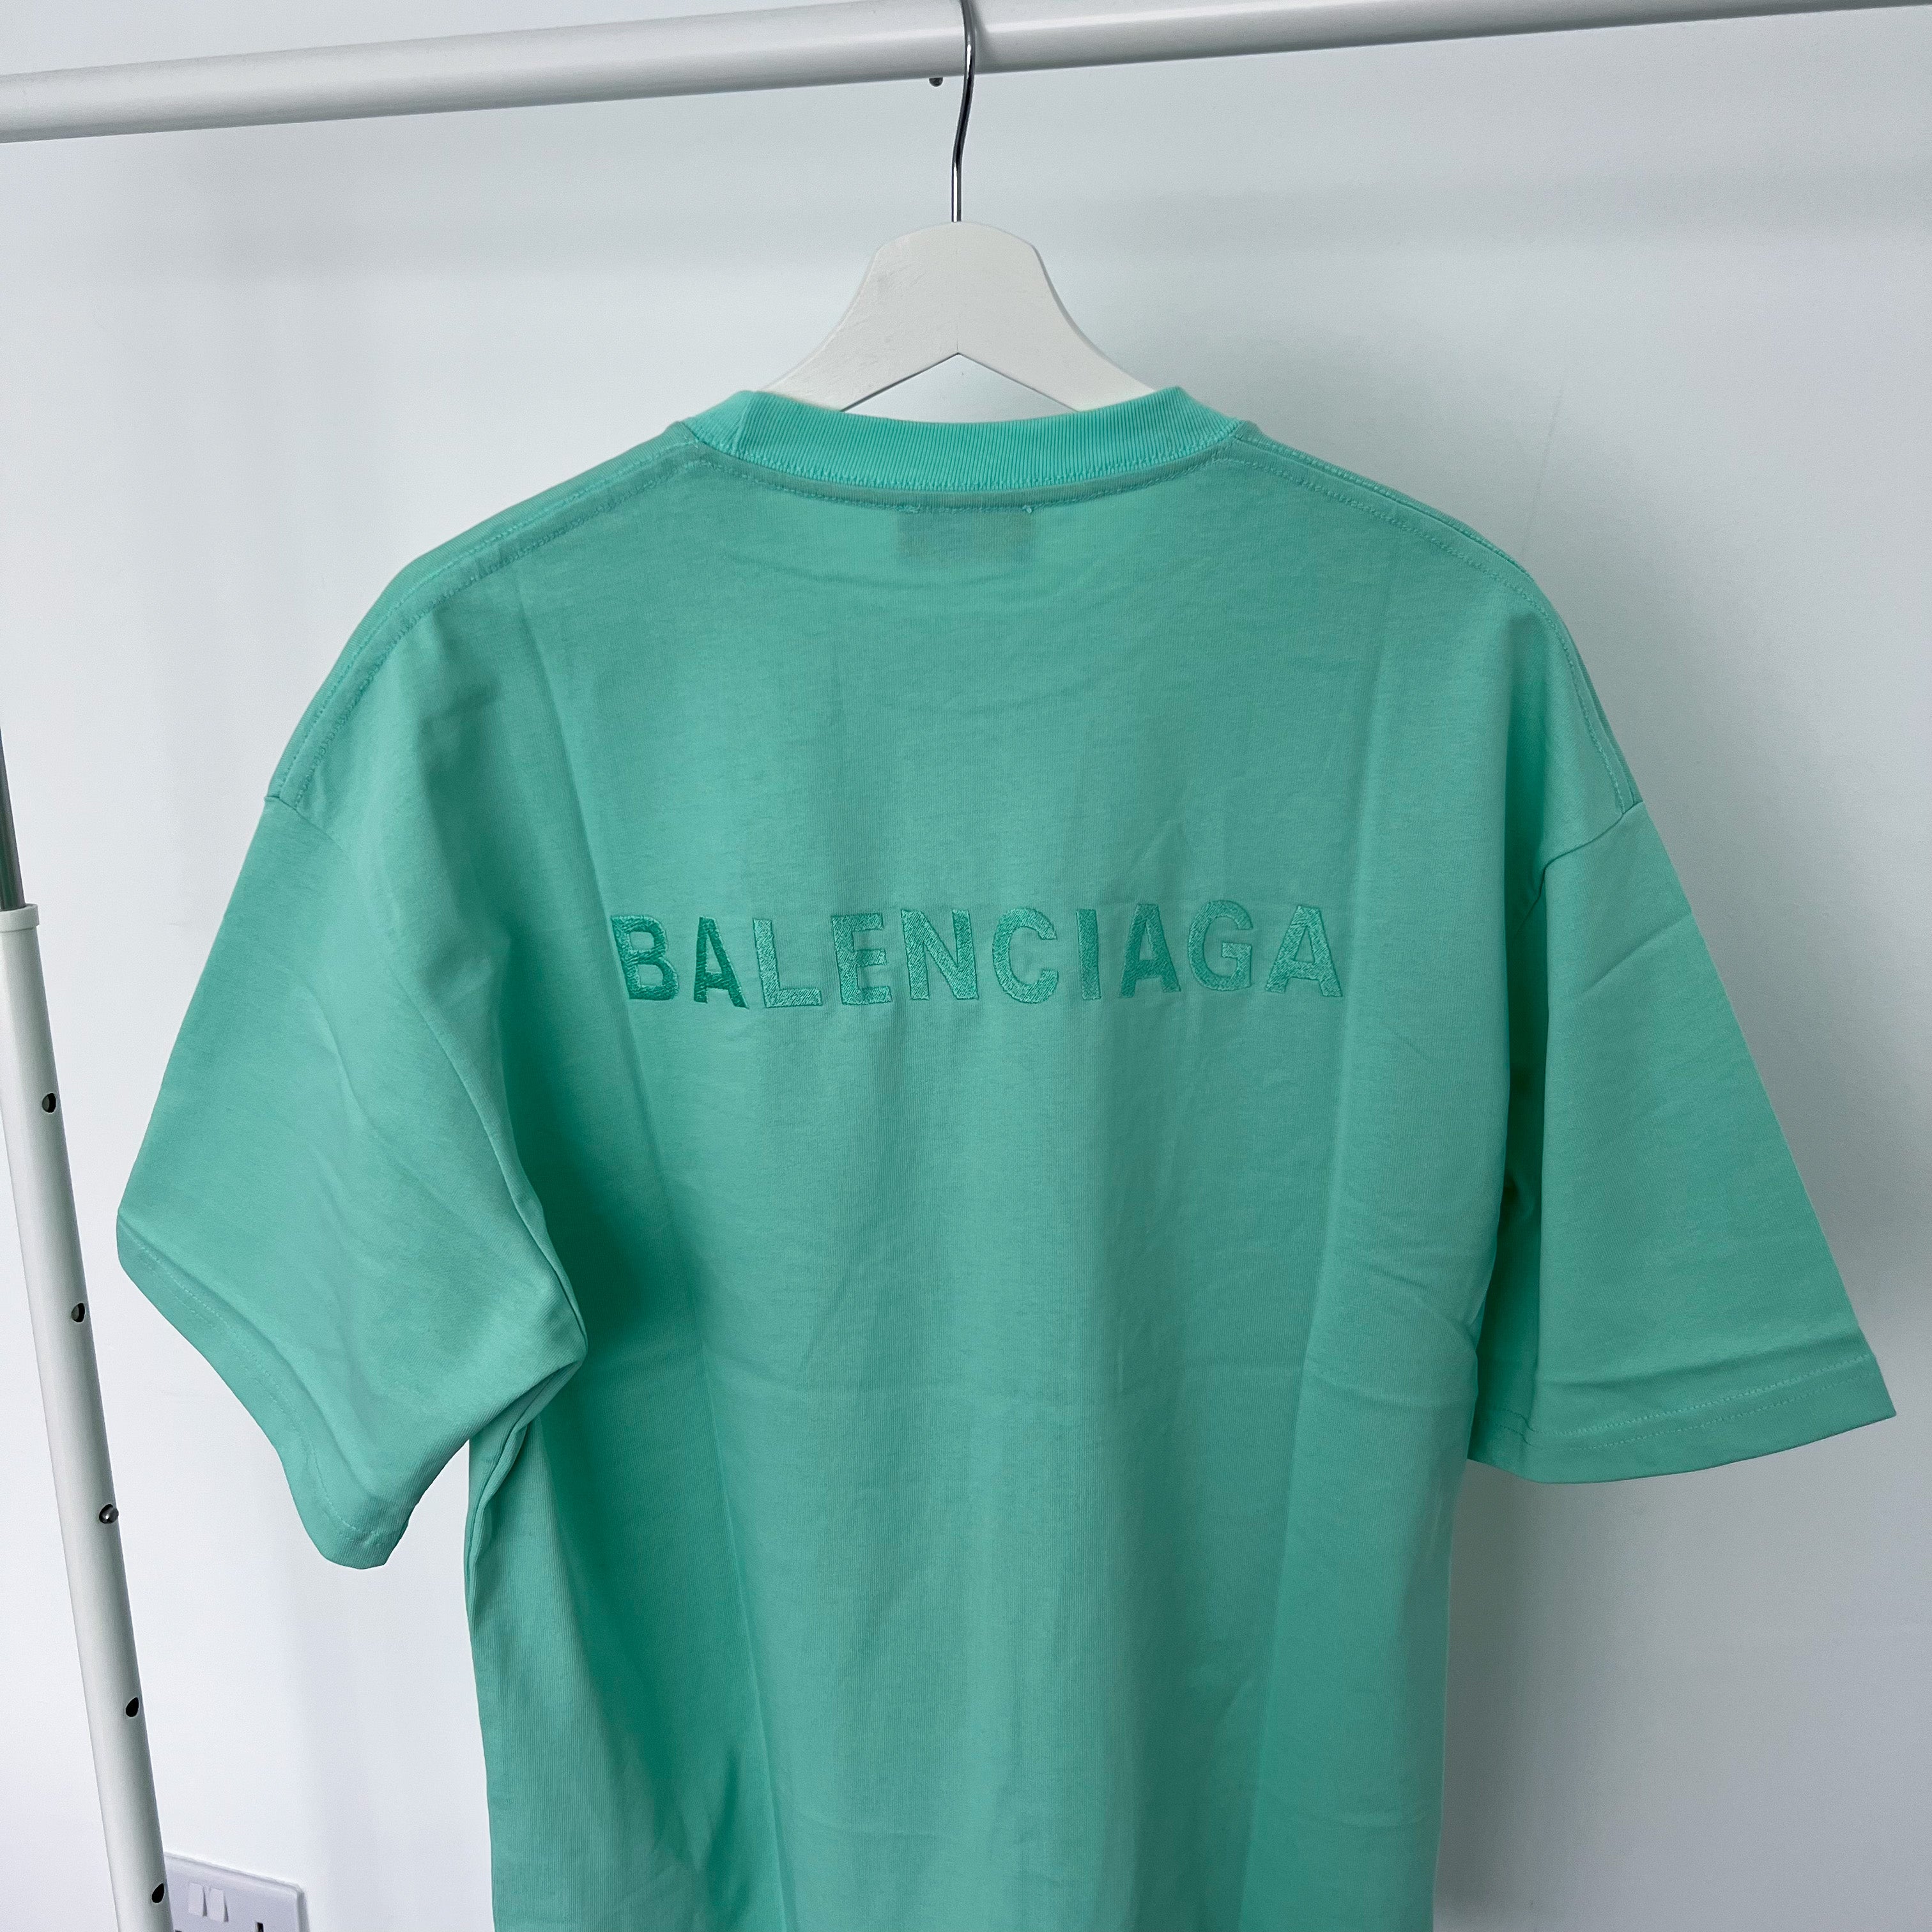 Balenciaga Embroidered Back Logo Tee - Teal